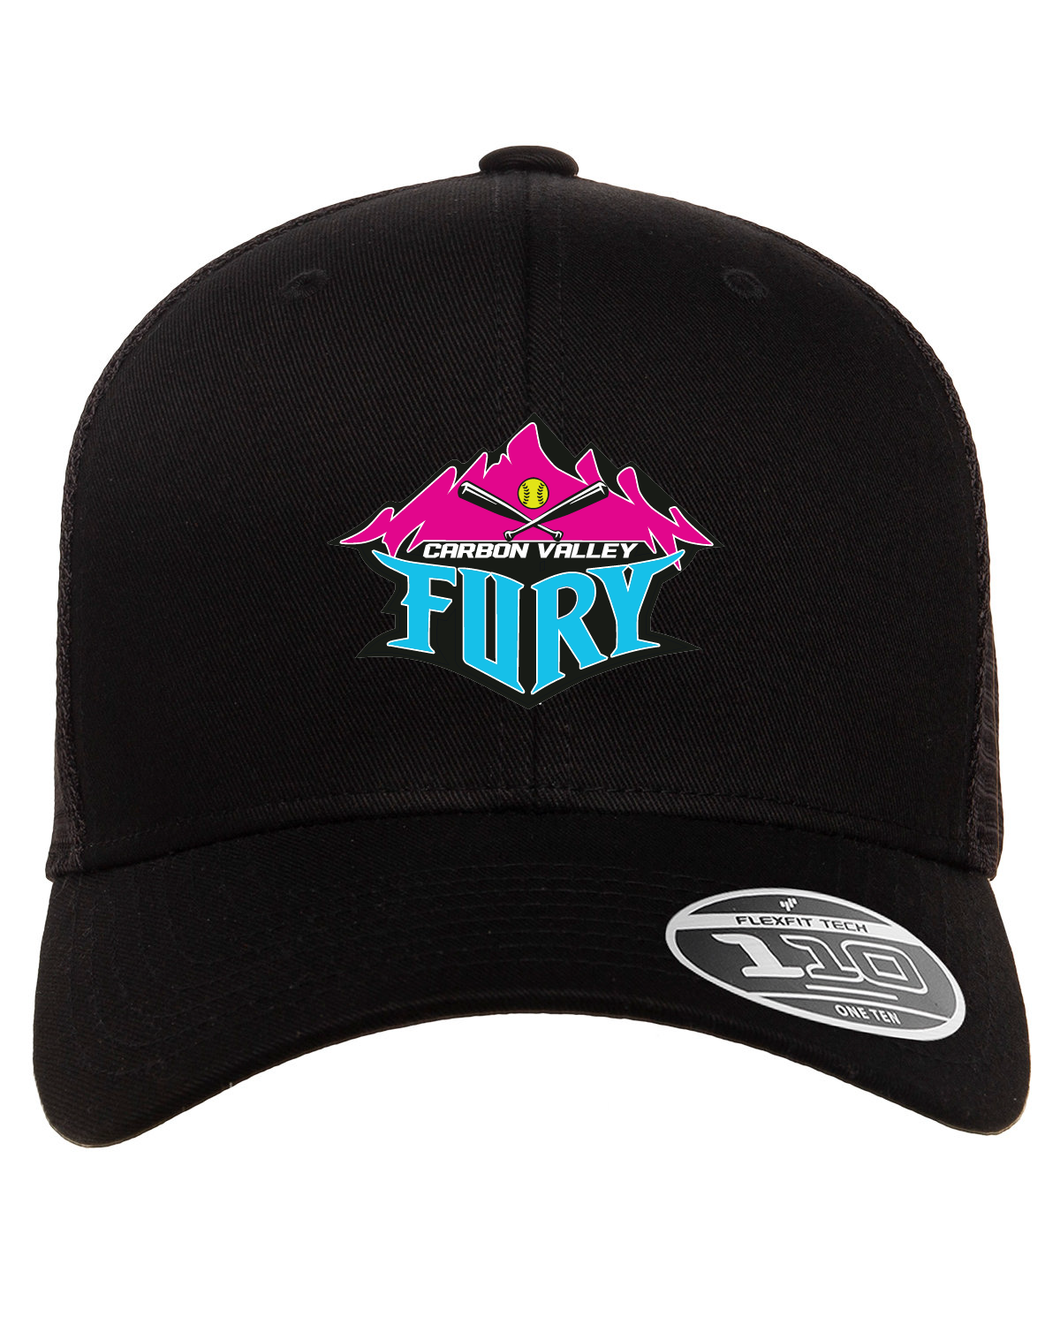 Fury Adjustable Mesh Back Cap